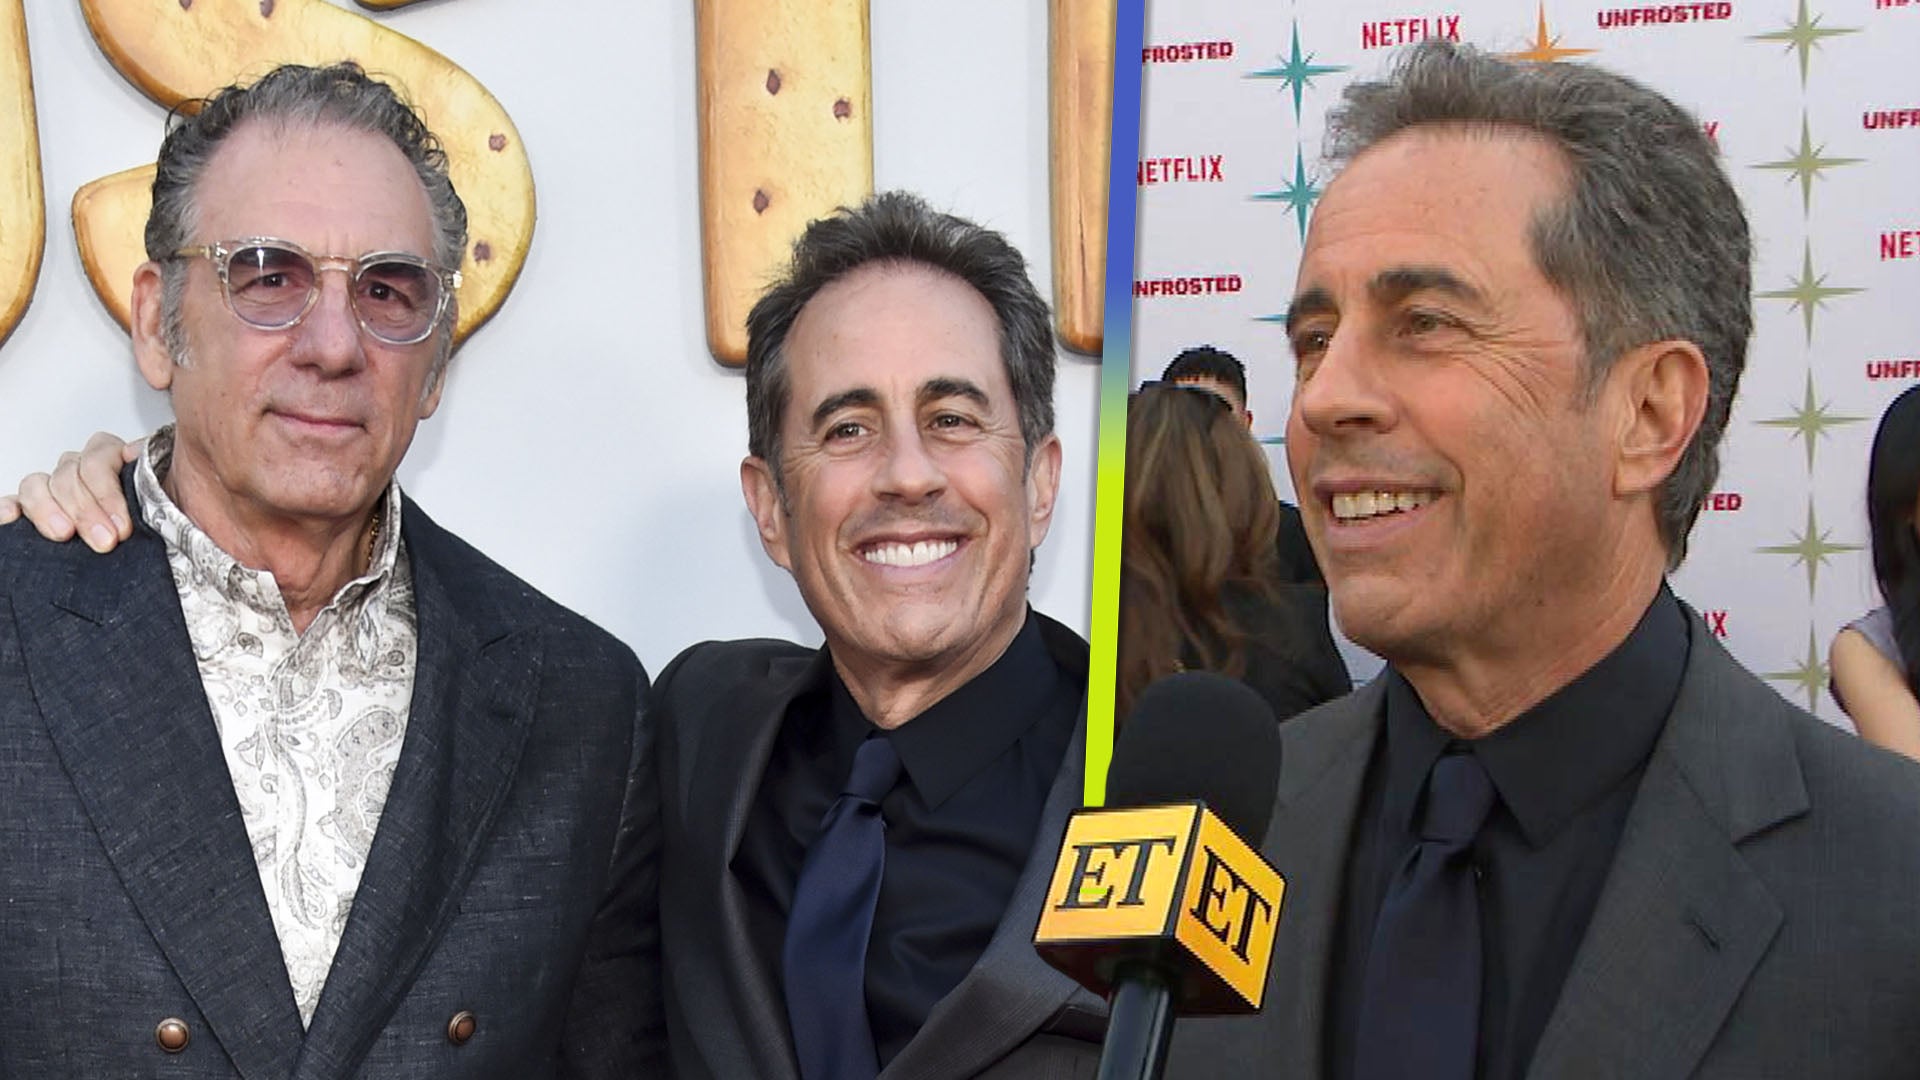 Jerry Seinfeld Has Rare Public Reunion With Kramer Actor Michael Richards